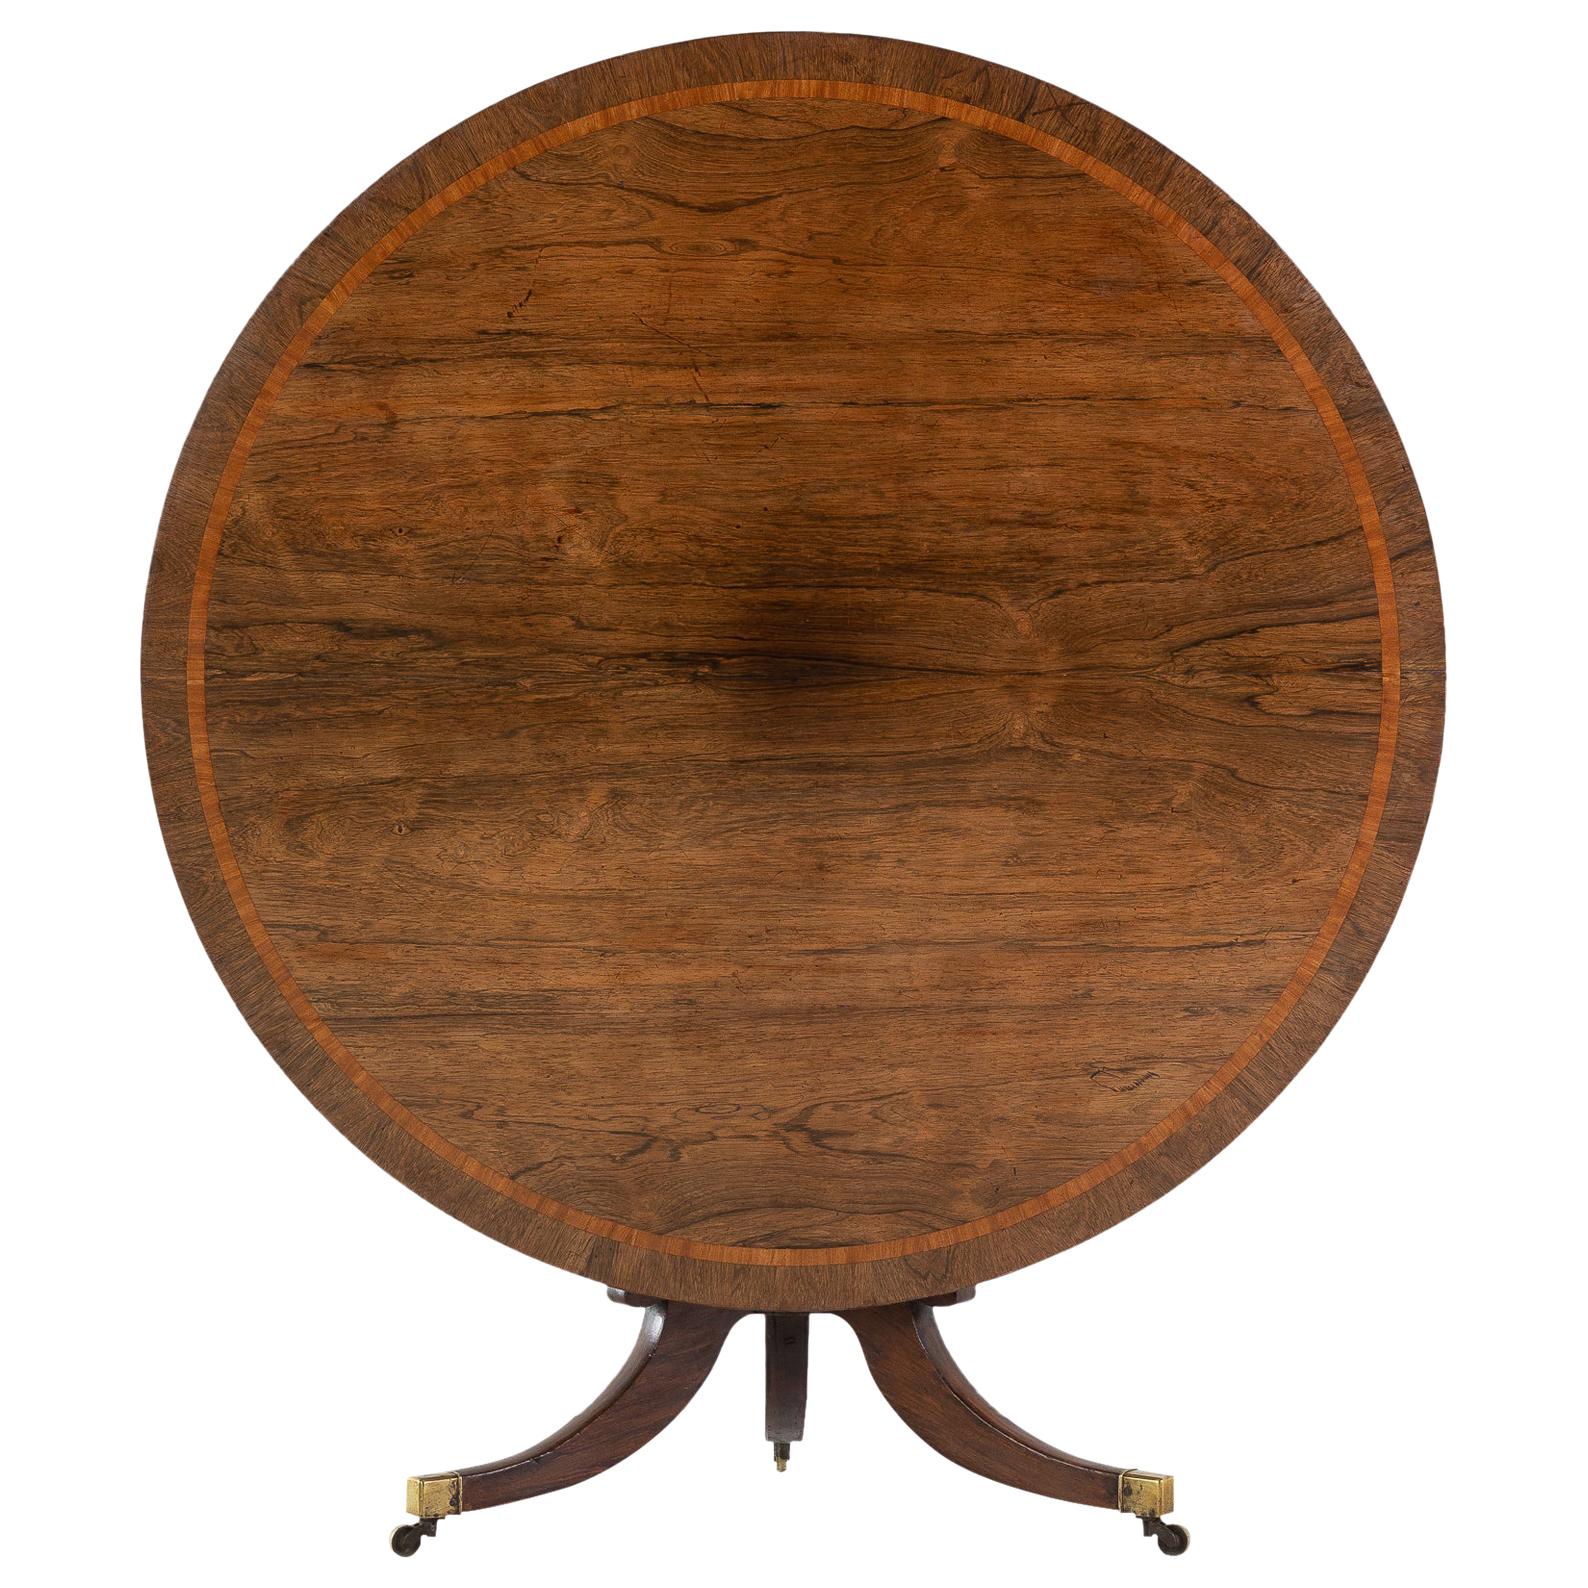 English Regency 19th Century Rosewood Circular Table